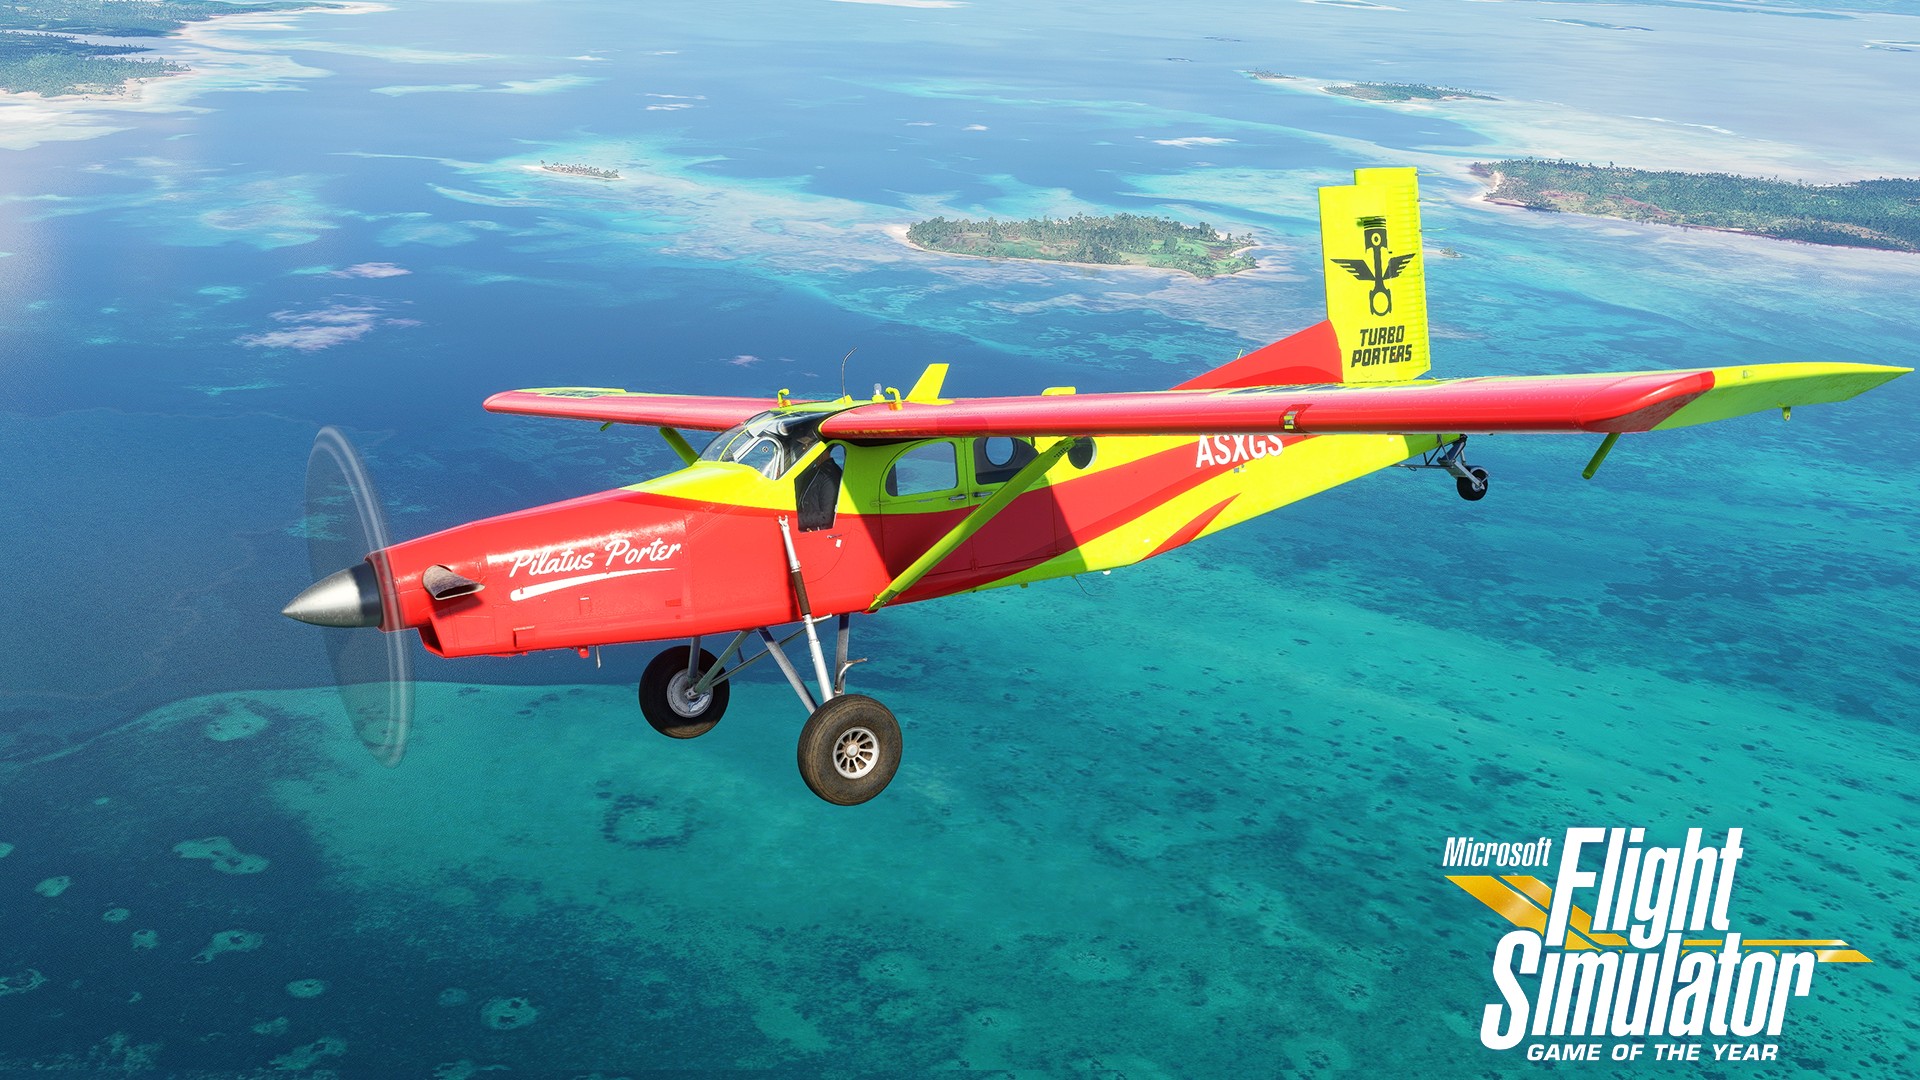 Video For Microsoft Flight Simulator: Game of the Year-Edition erscheint am 18. November!